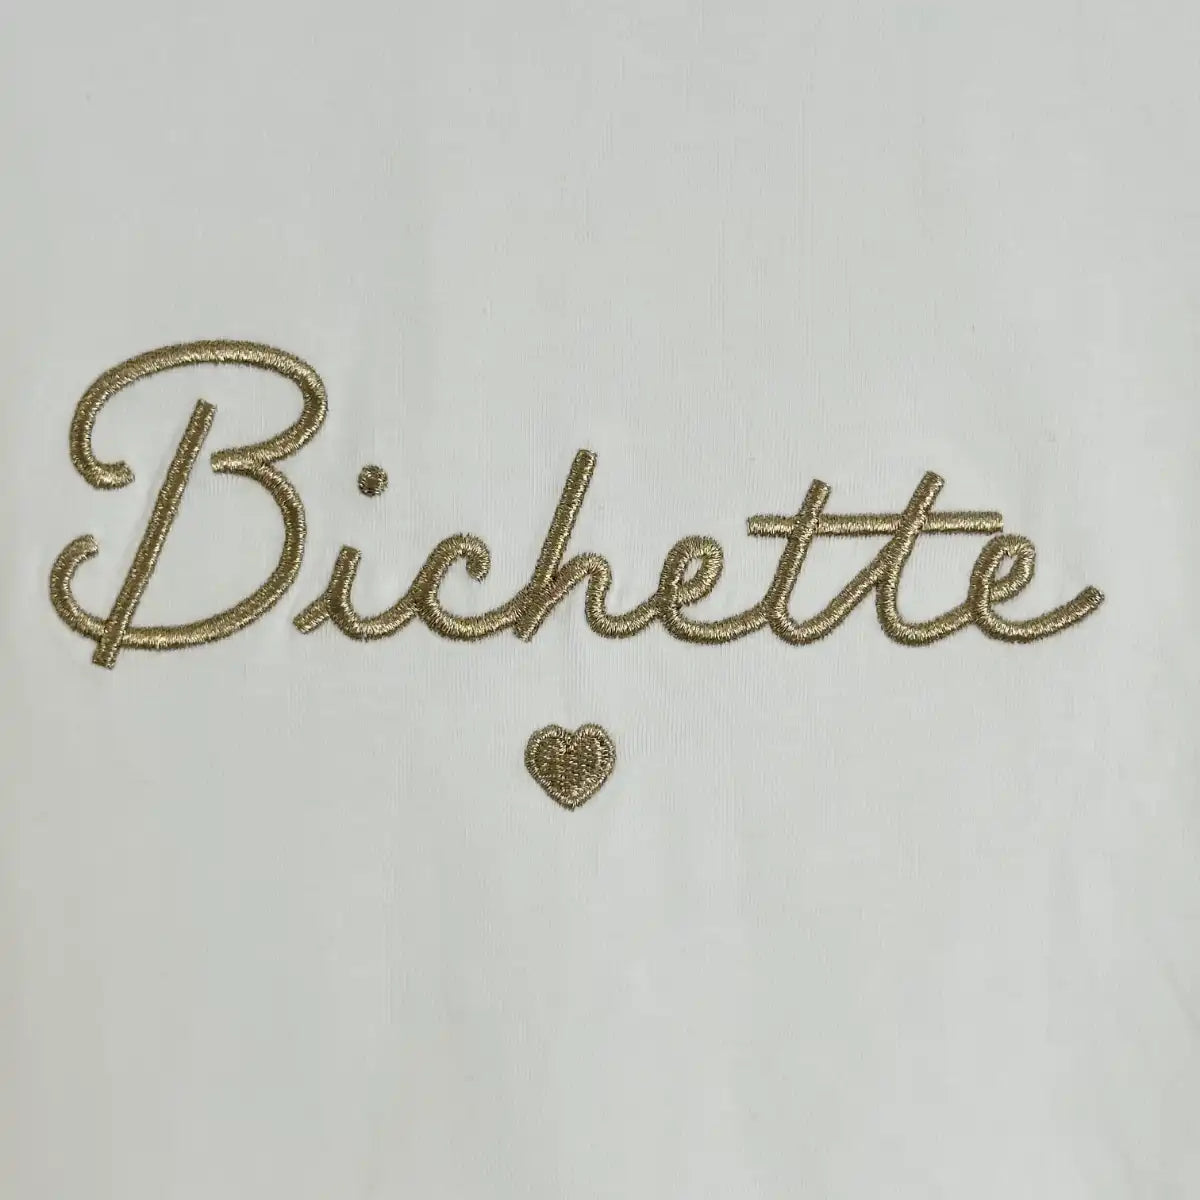 T-shirt « Bichette » femme